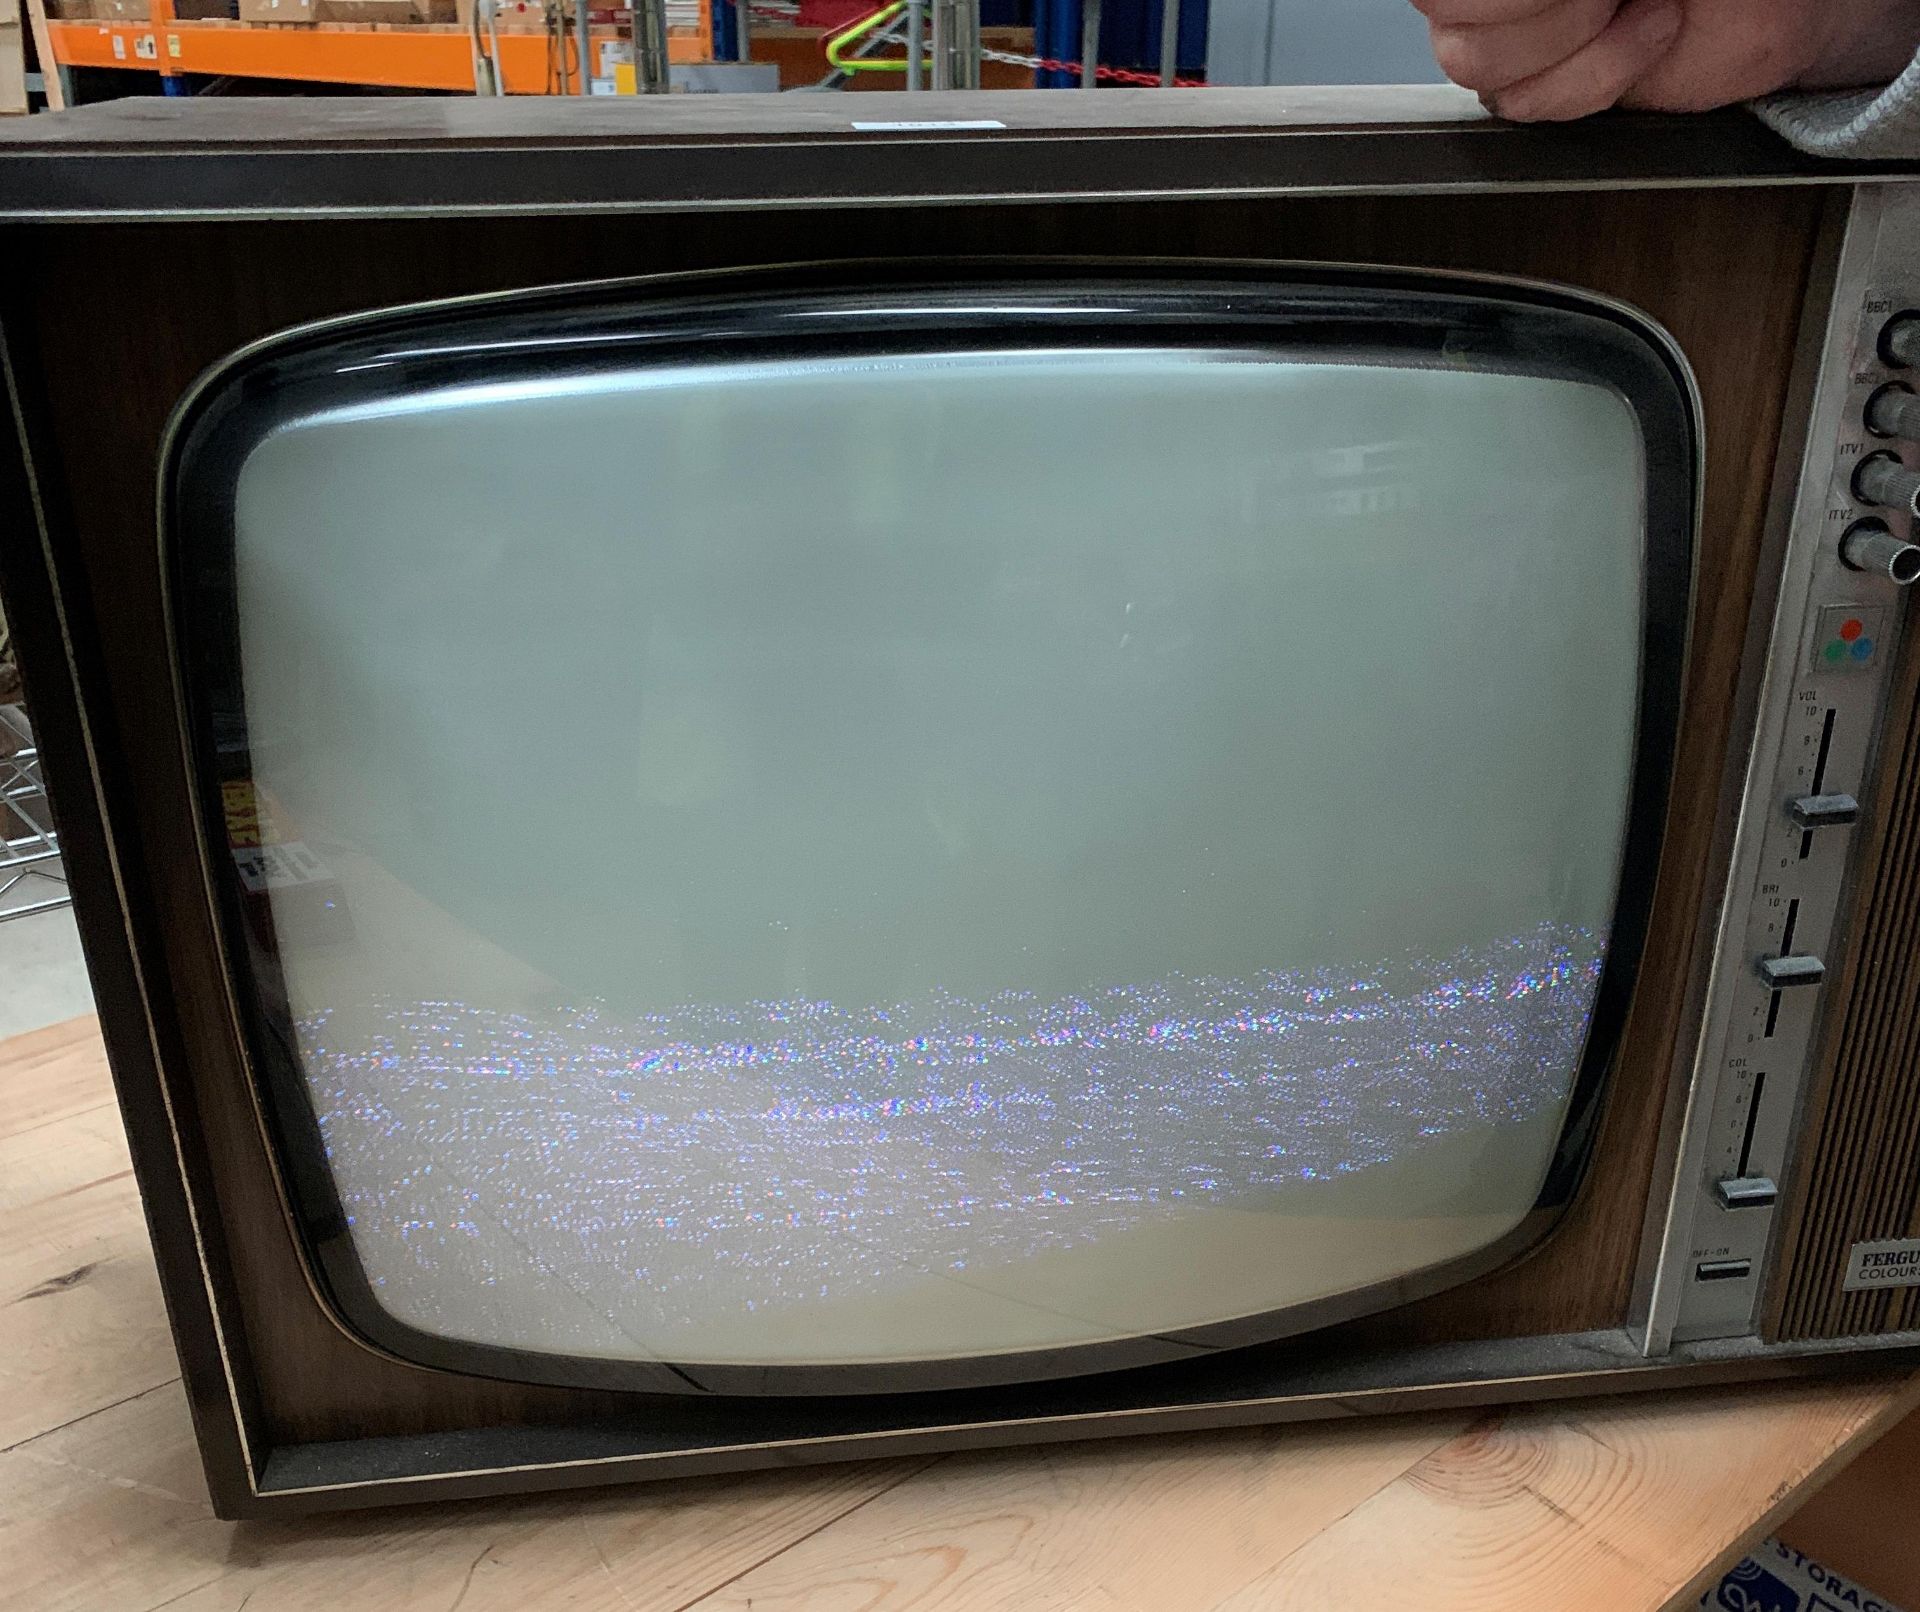 A Ferguson Colour Star model no: 3713 20" vintage TV